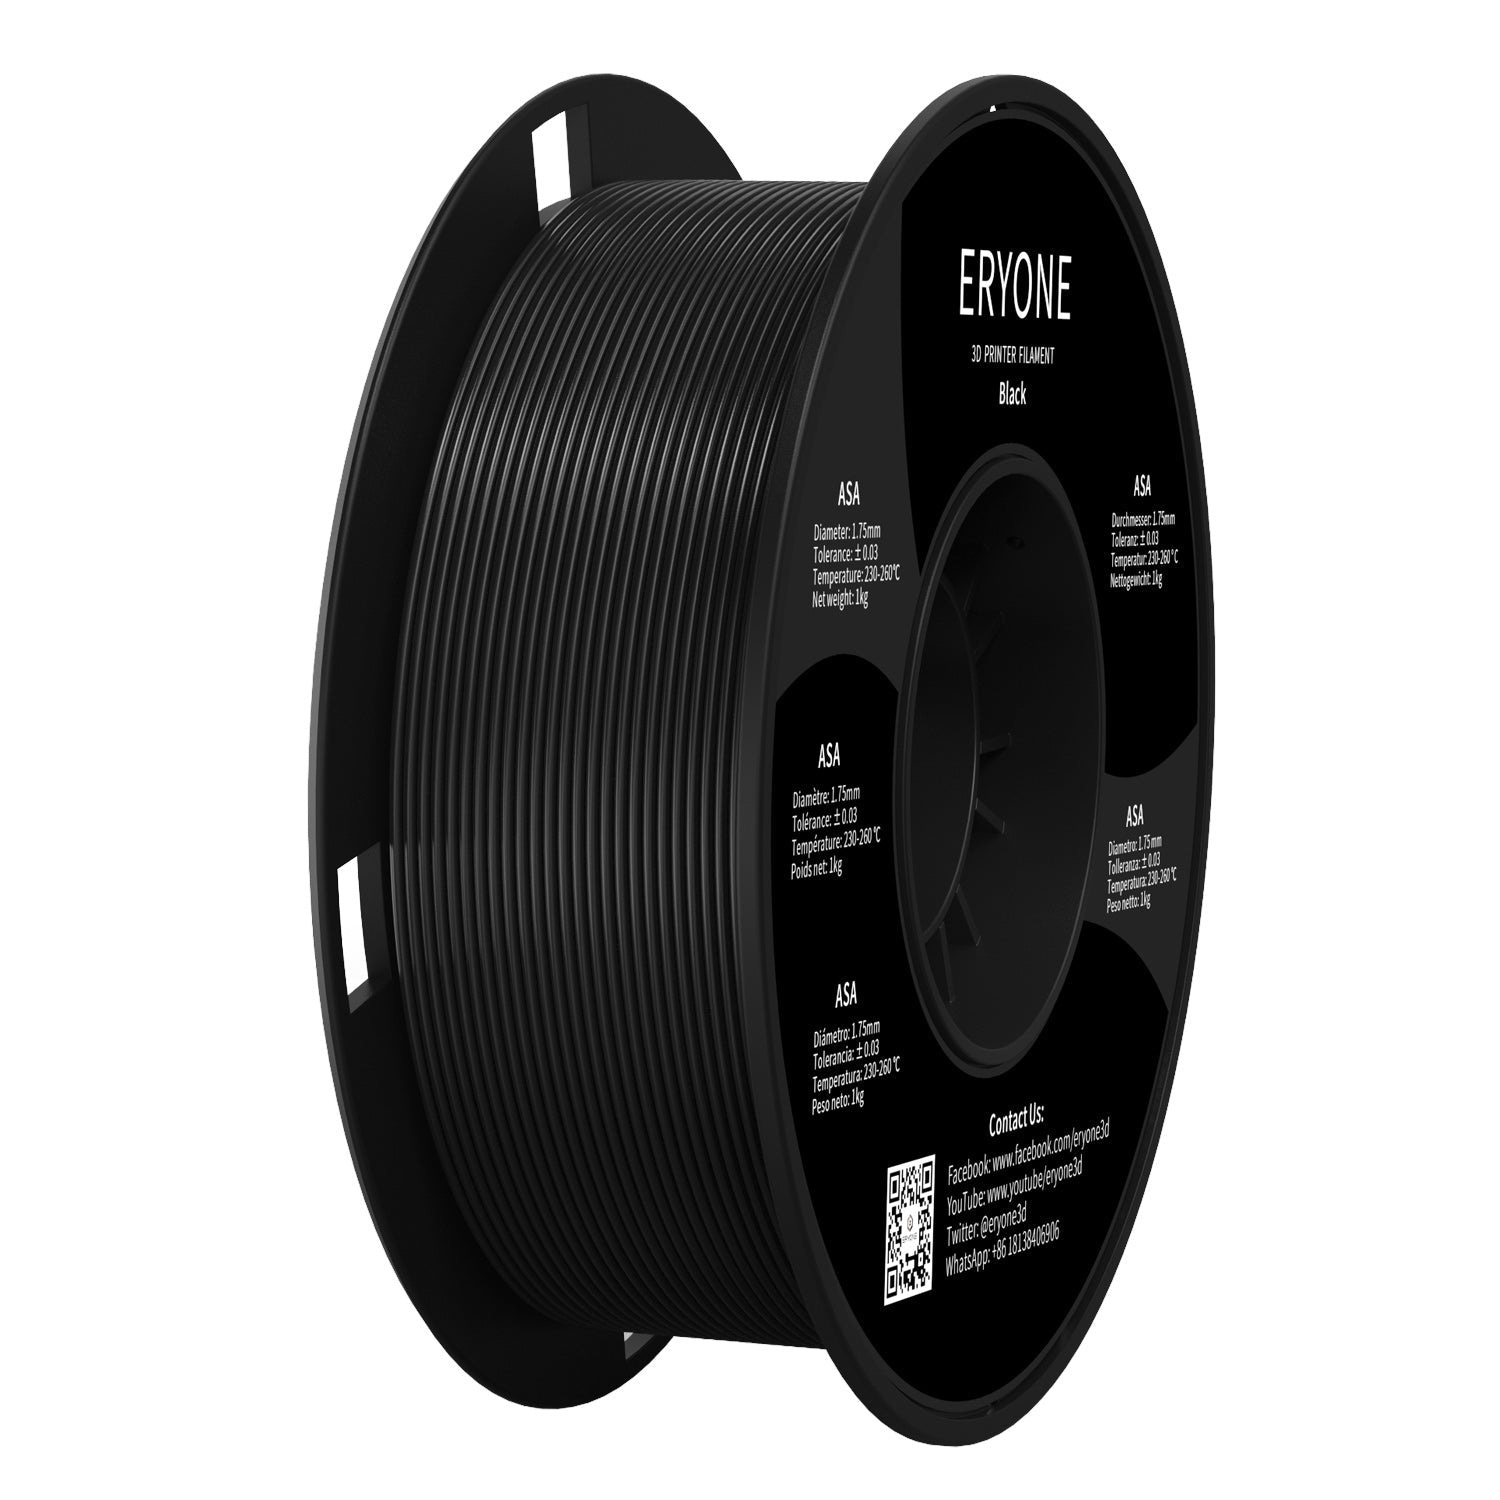 Pre-sale ERYONE ASA 3D Printer Filament 1.75mm, Dimensional Accuracy +/- 0.05 Mm 1kg (2.2LBS)/Spool